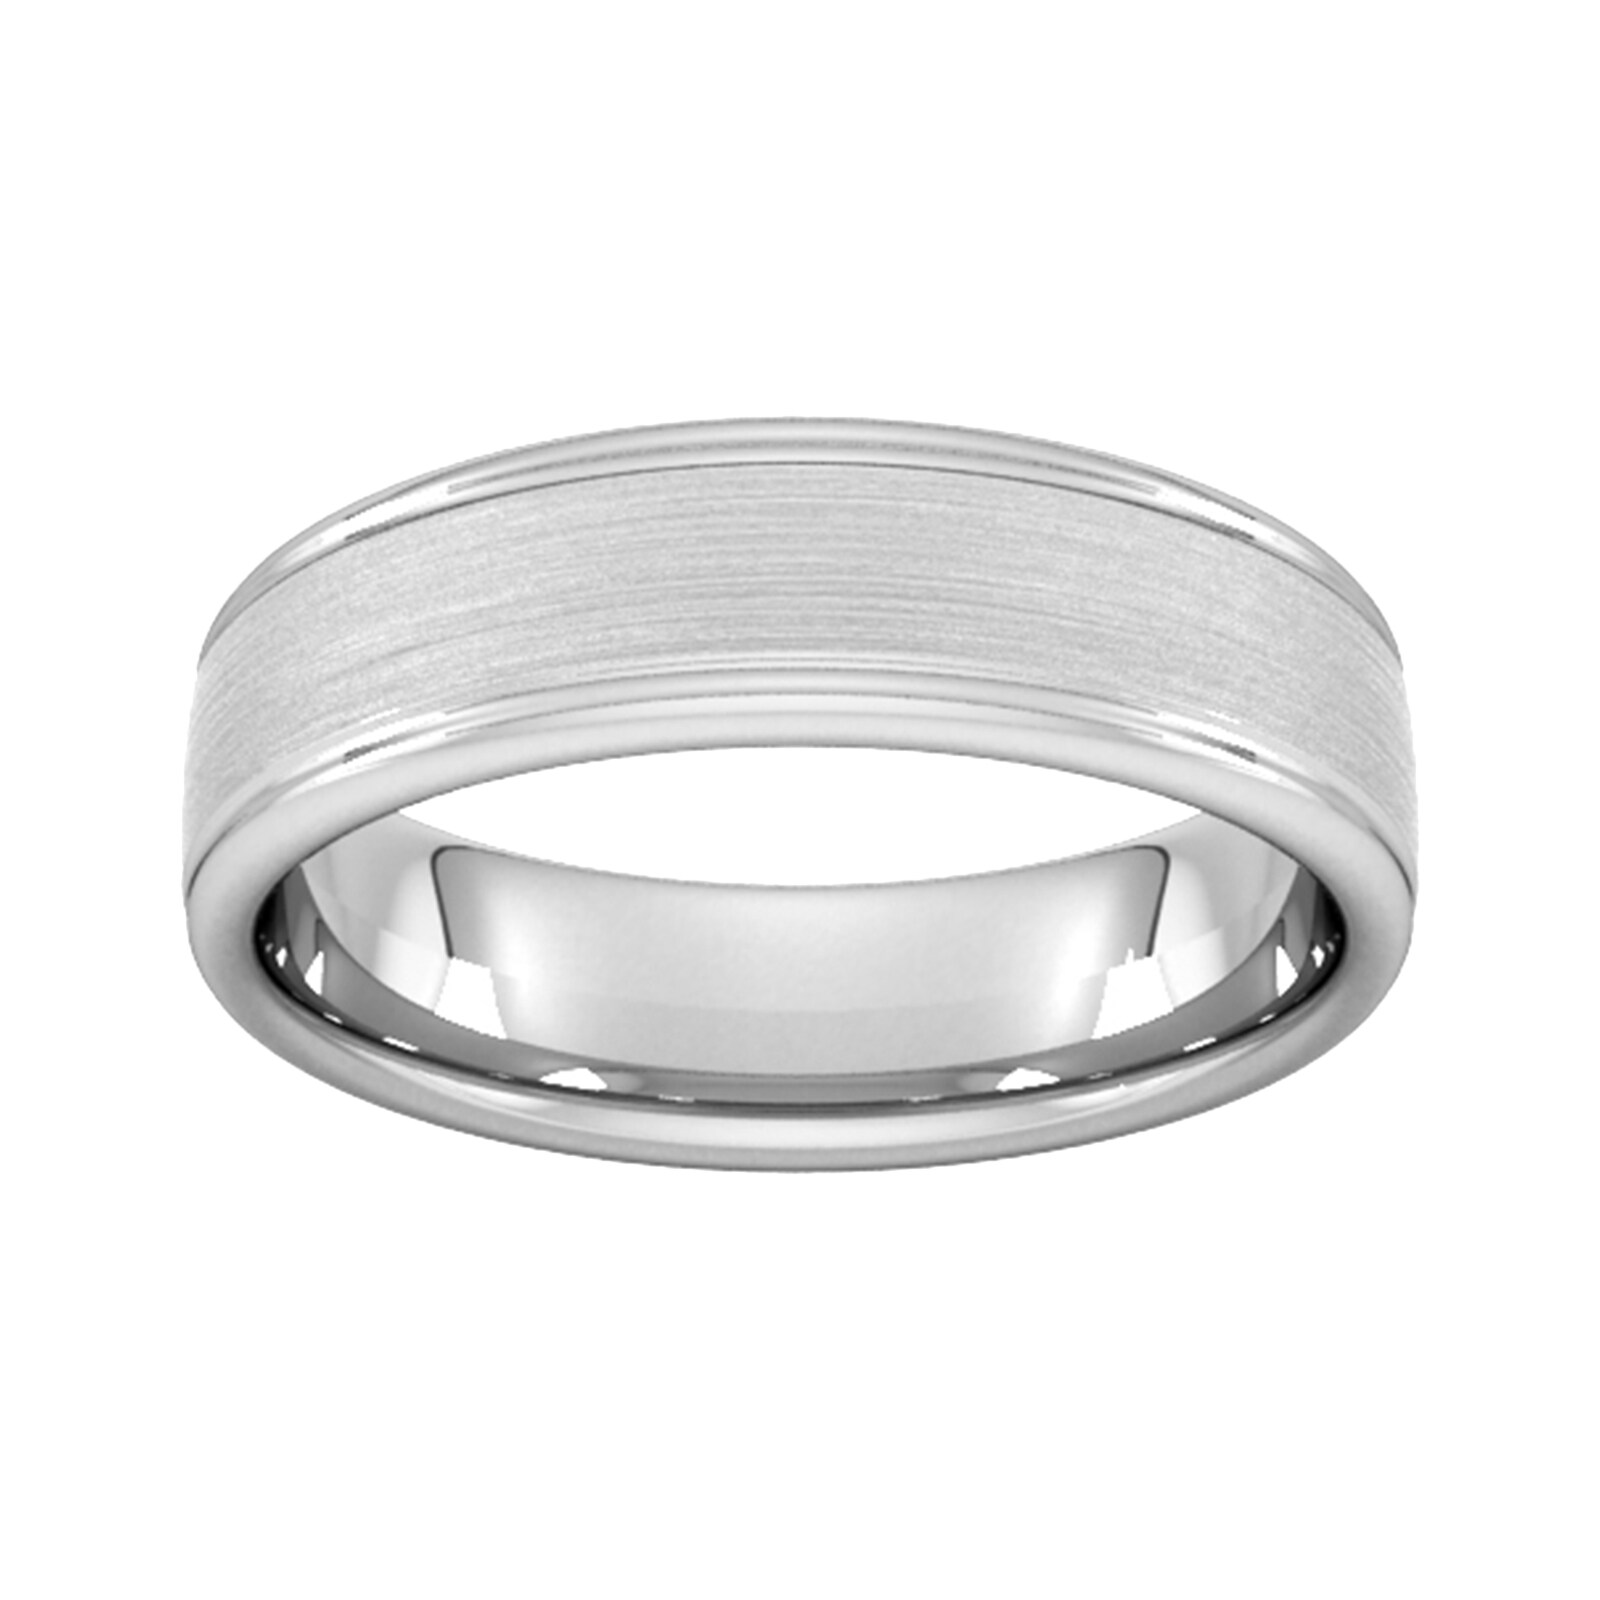 6mm Slight Court Standard Matt Centre With Grooves Wedding Ring In 950 Palladium - Ring Size G